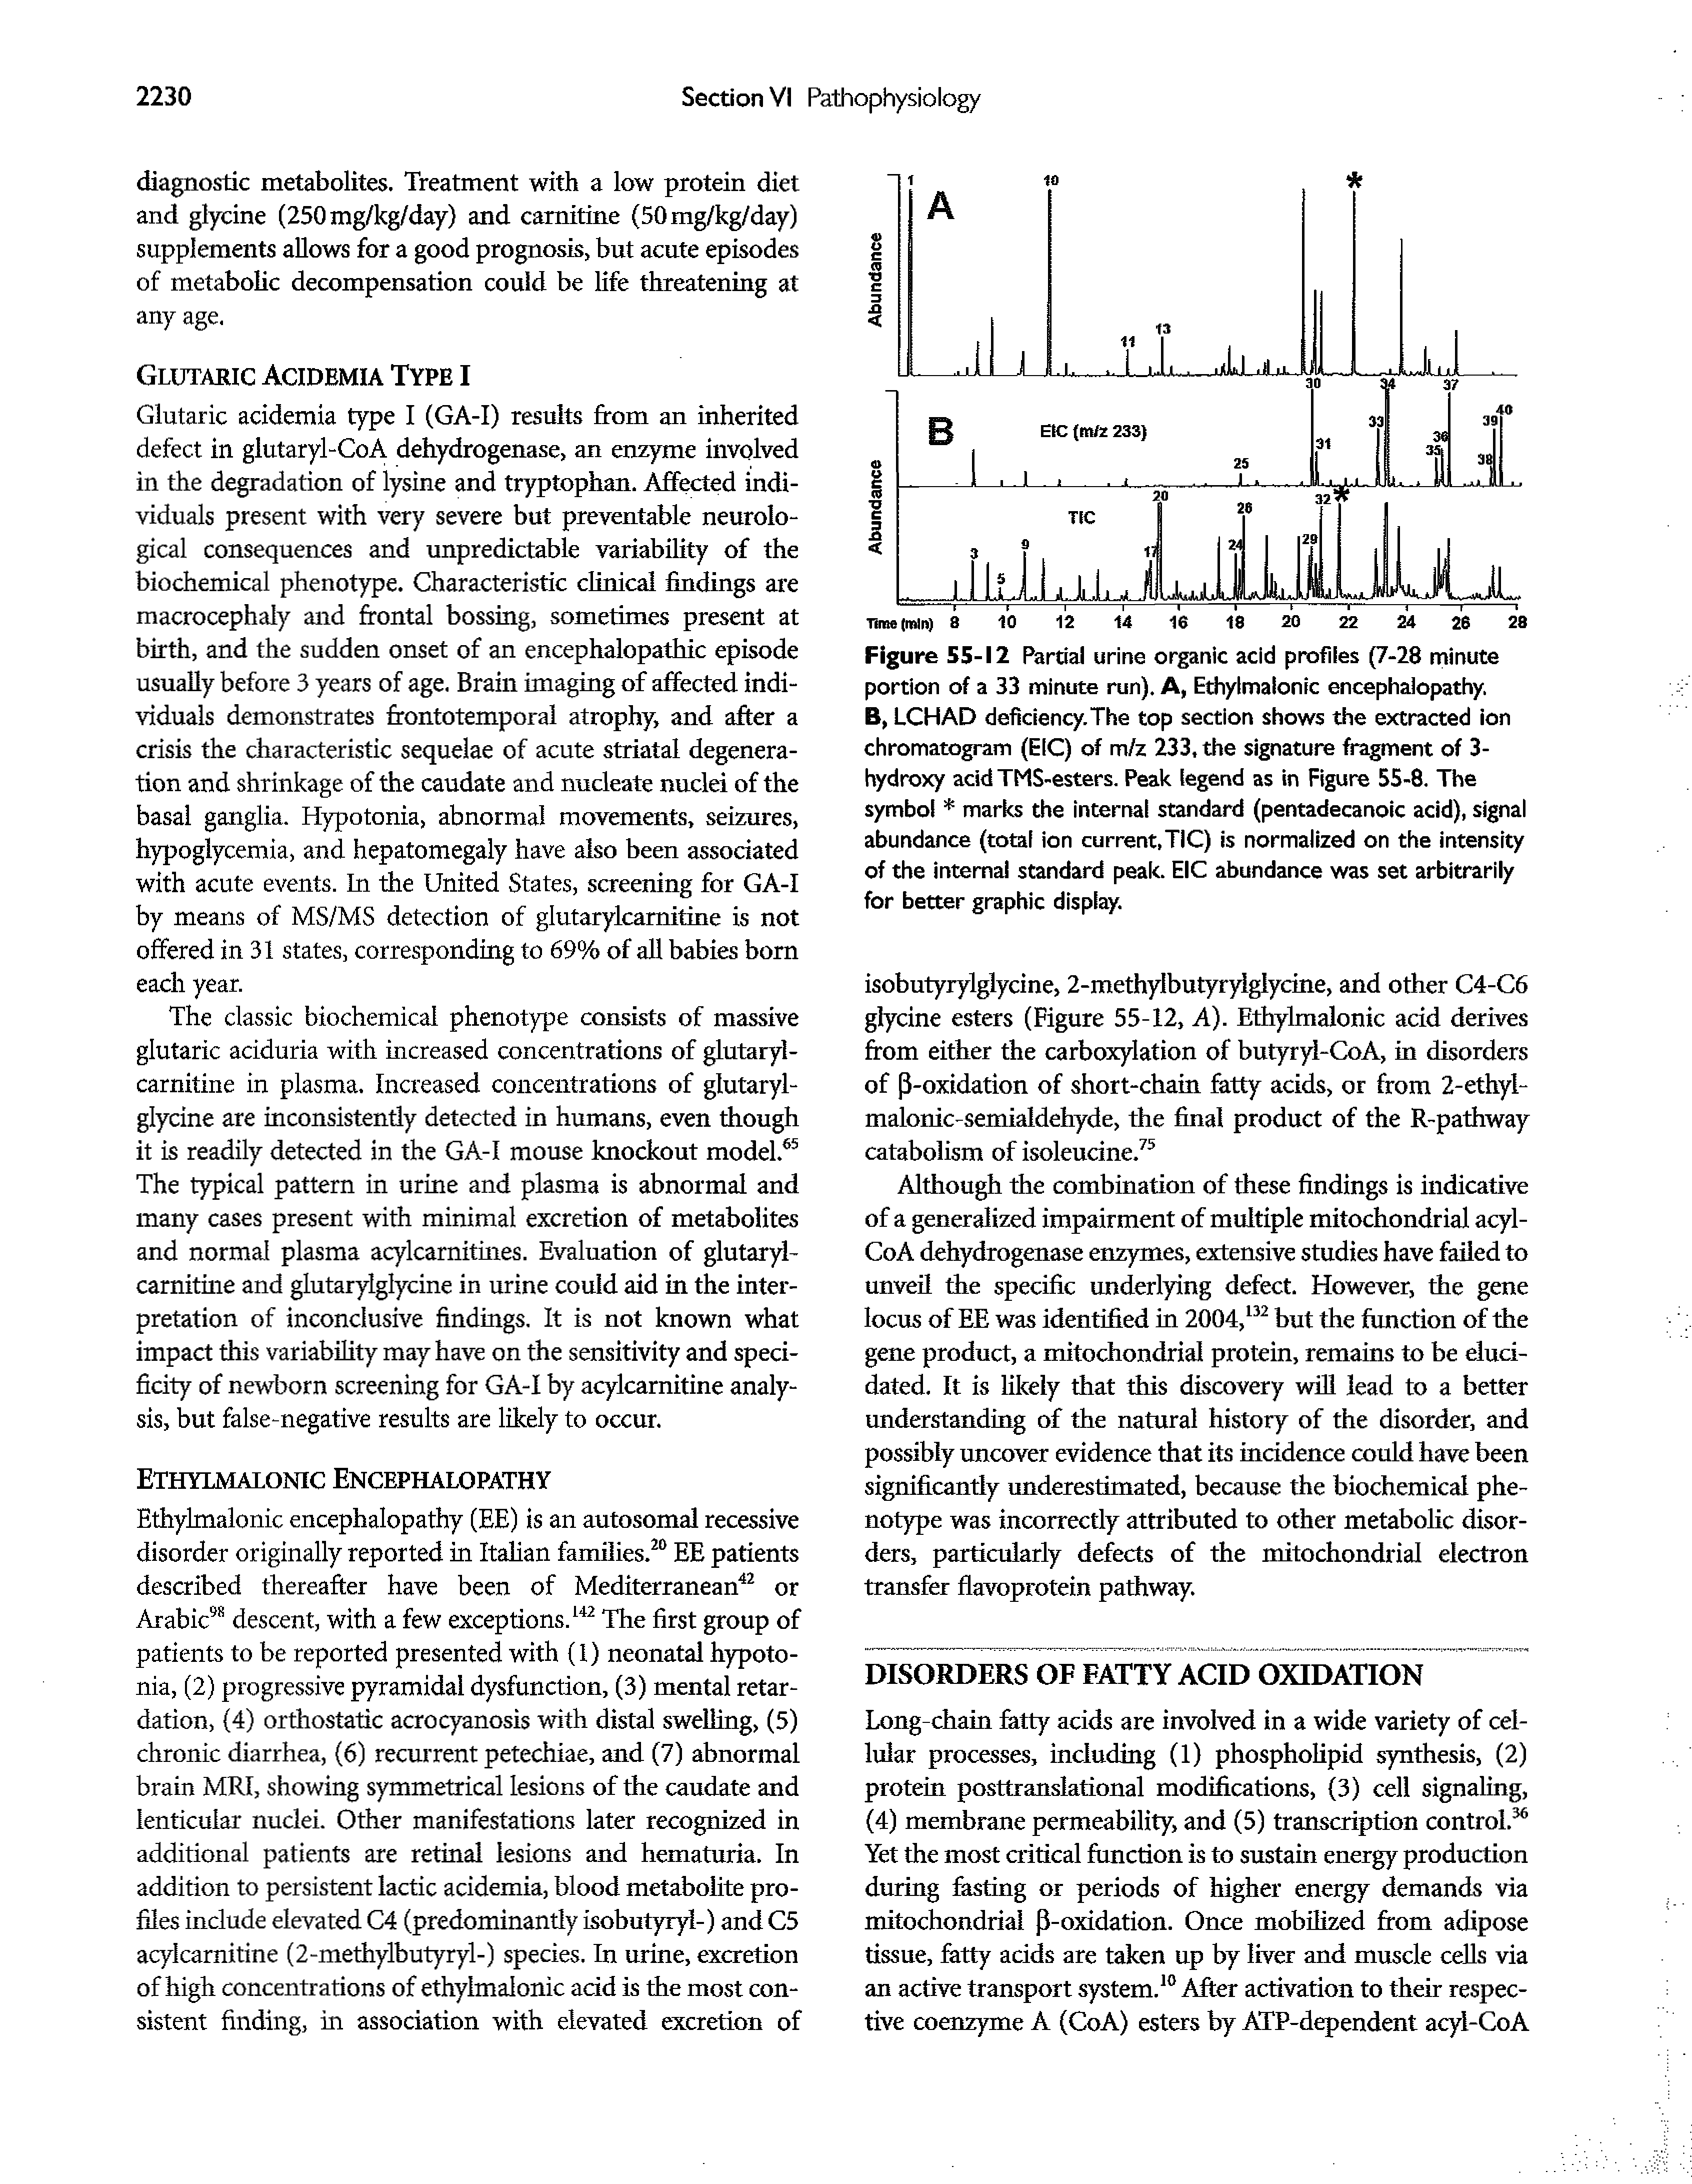 Figure 55-12 Partial urine organic acid profiles (7-28 minute portion of a 33 minute run). A, Ethylmalonic encephalopathy.